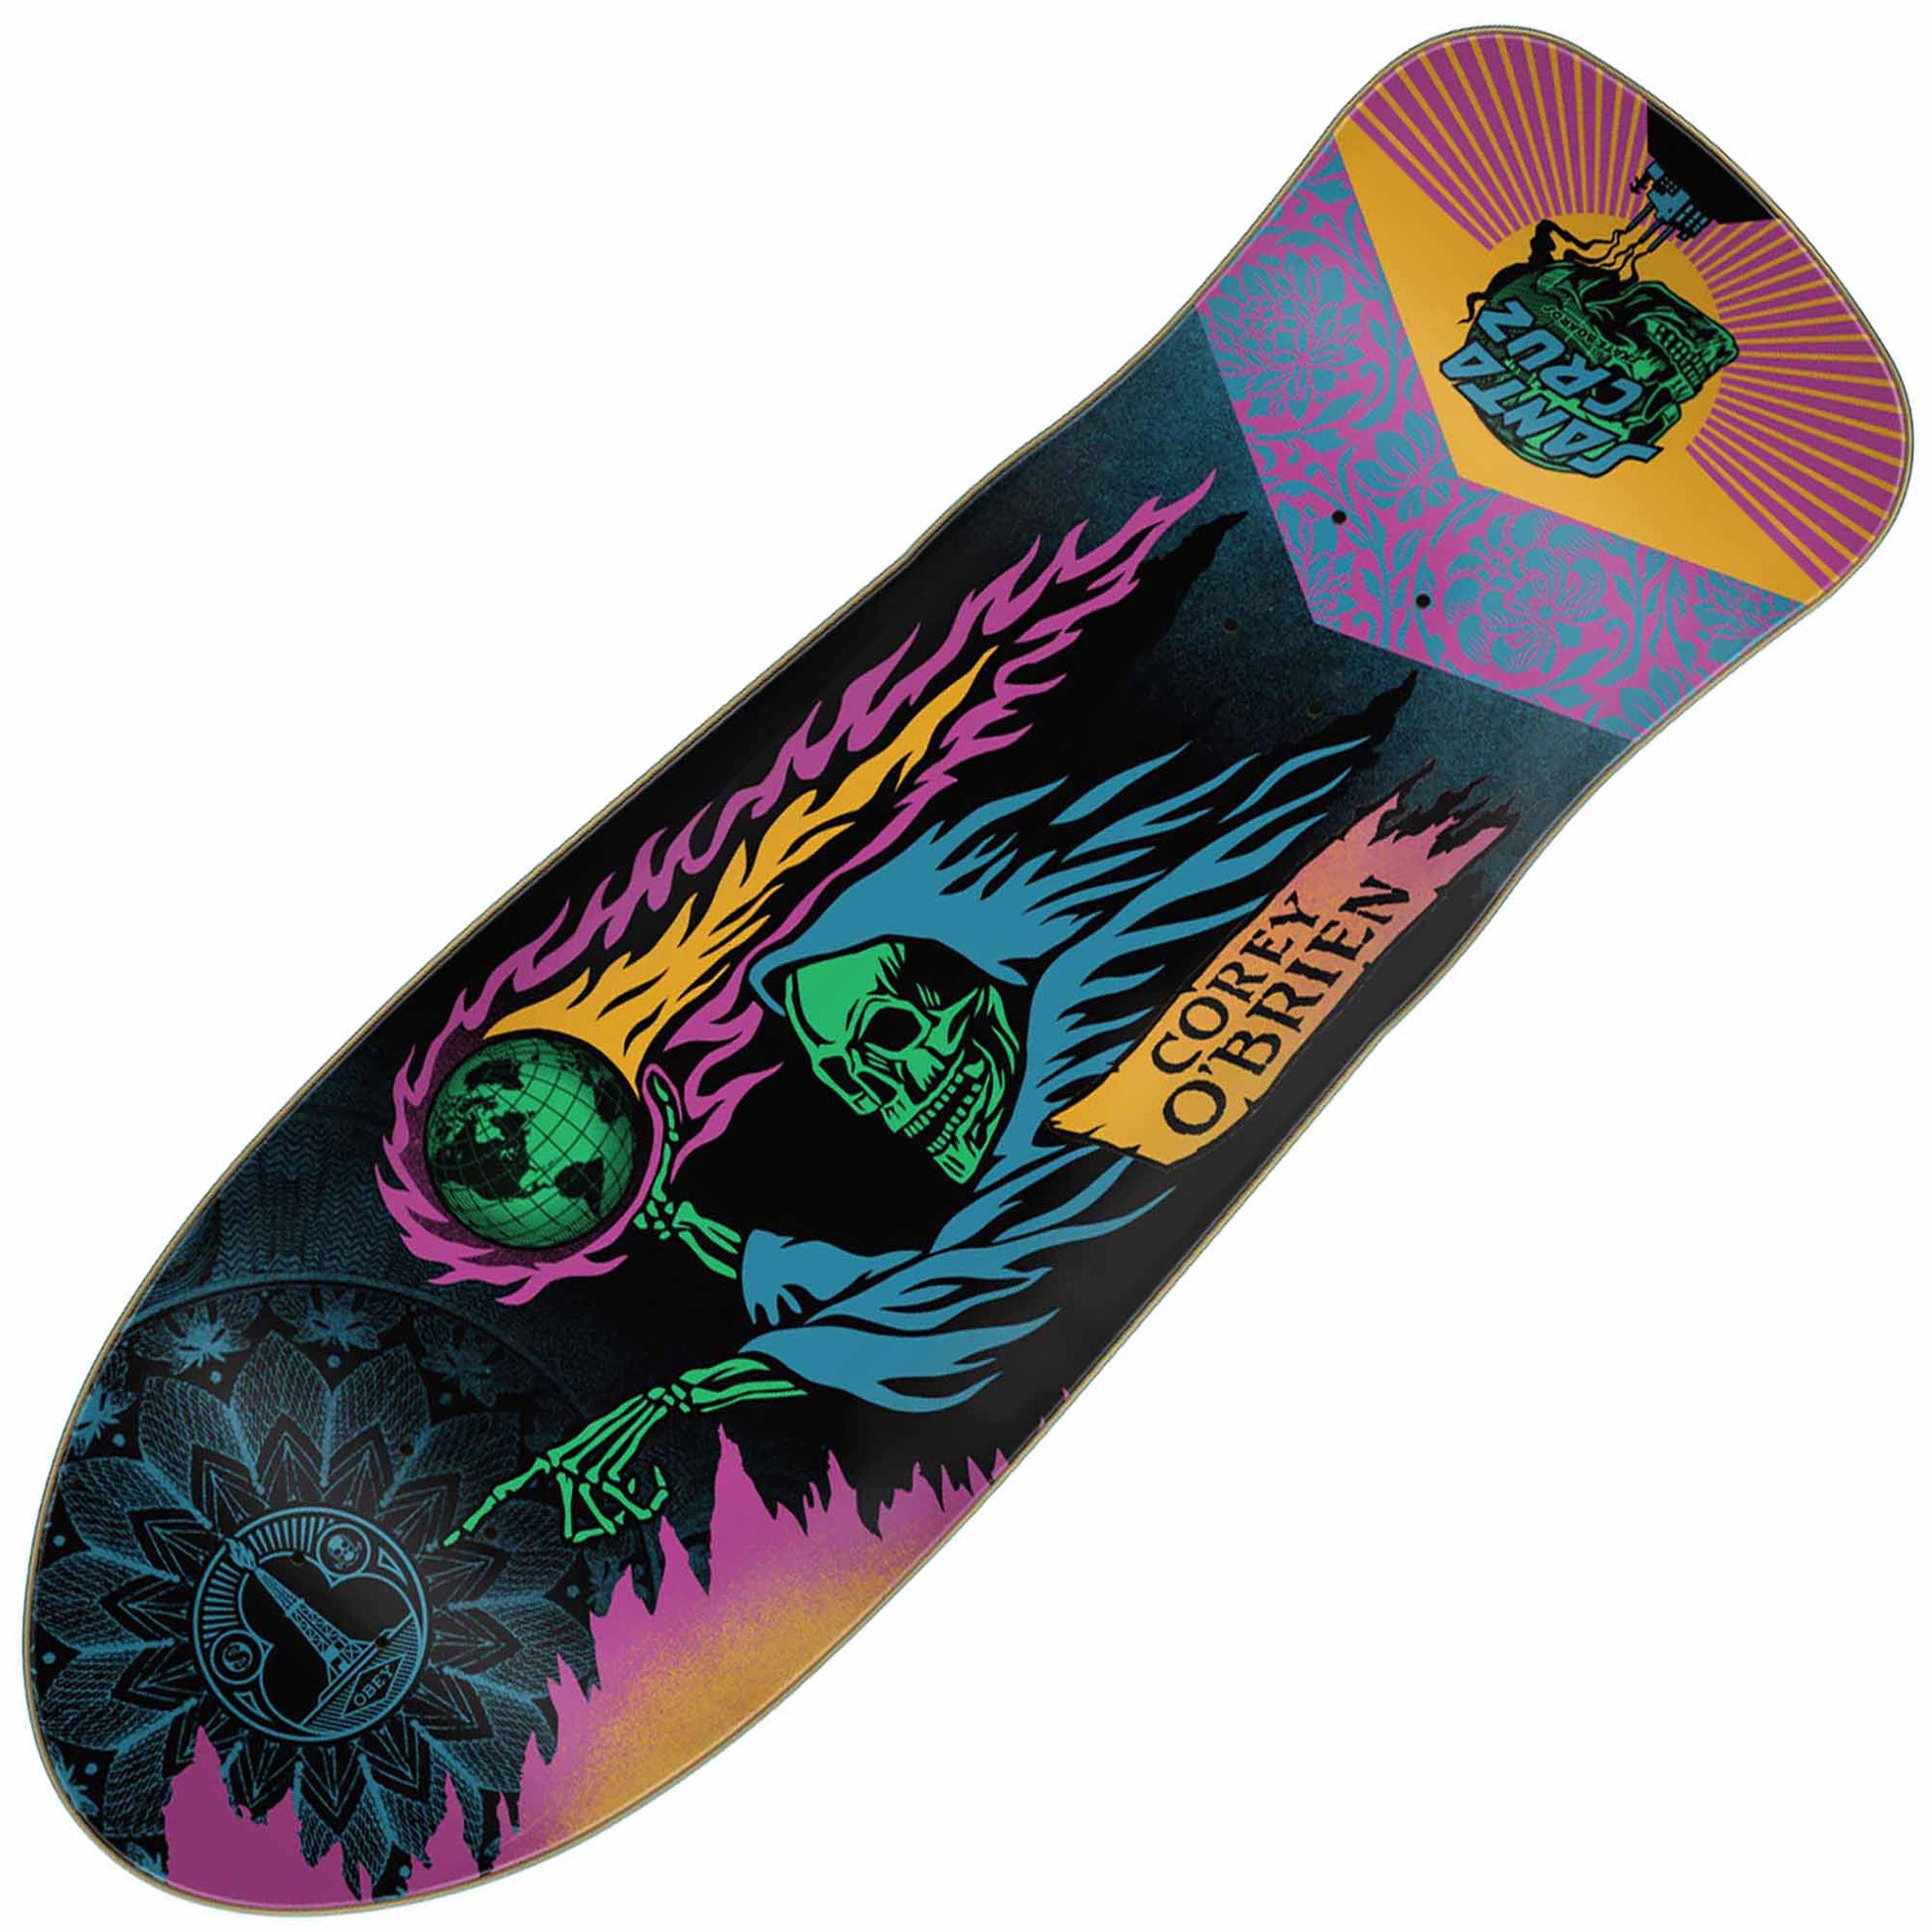 Santa Cruz Obrien Reaper By Shepard Fairey Reissue Deck (9.85”x30") - Tiki Room Skateboards - 1